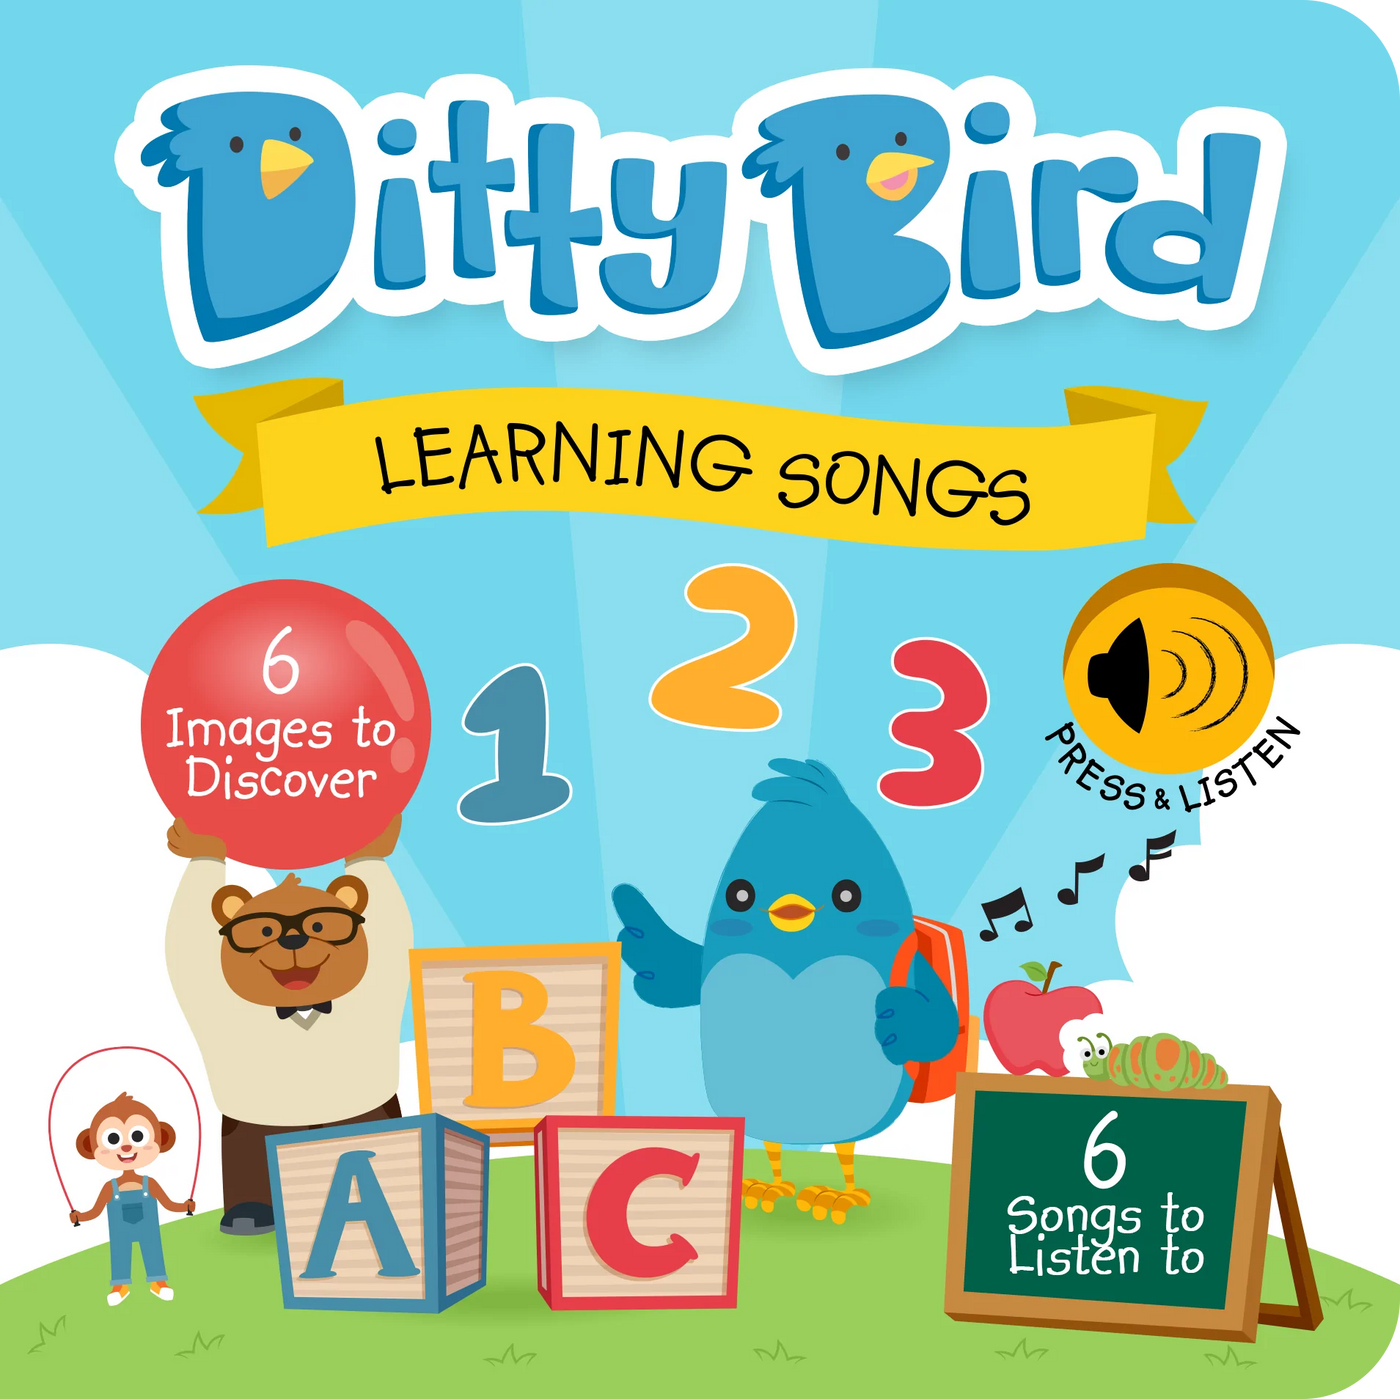 Ditty Bird- Learning Songs